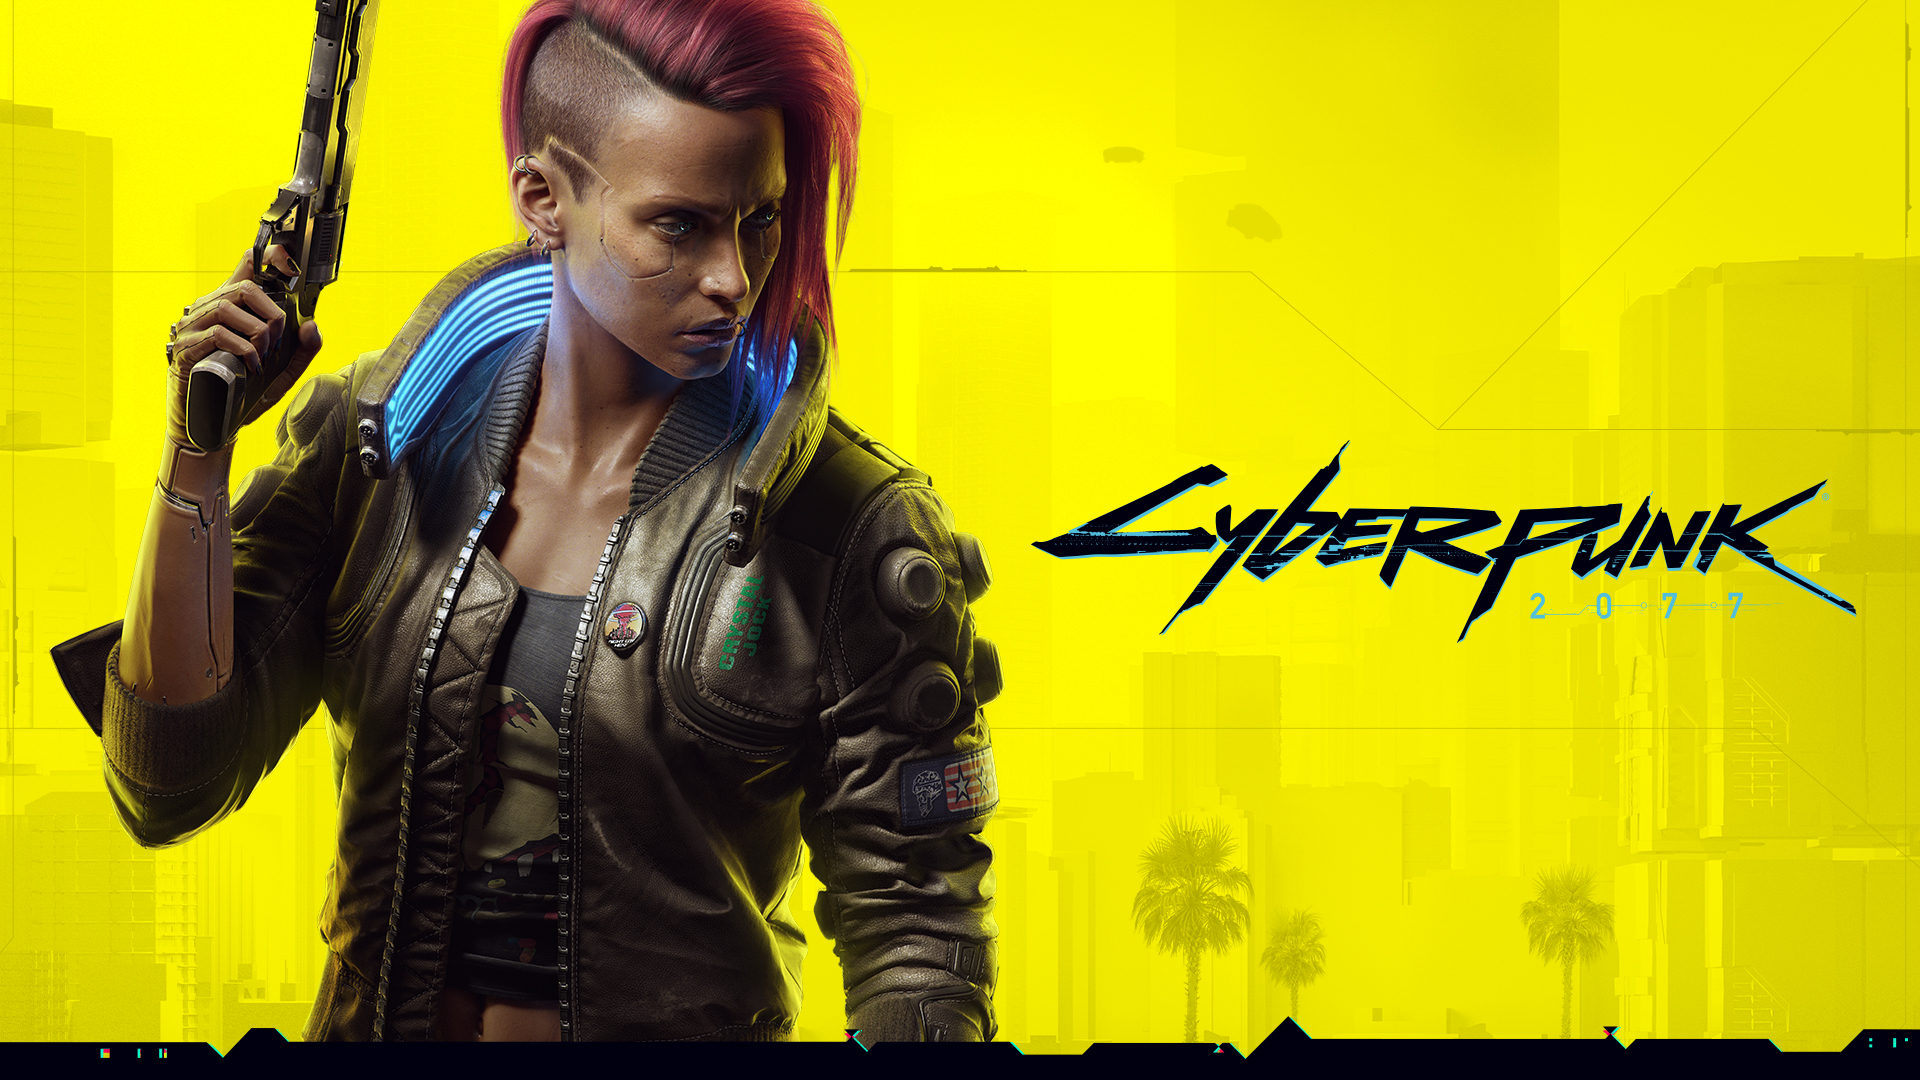 4. Cyberpunk 2077 Female Protagonist with Blue Hair - wide 2